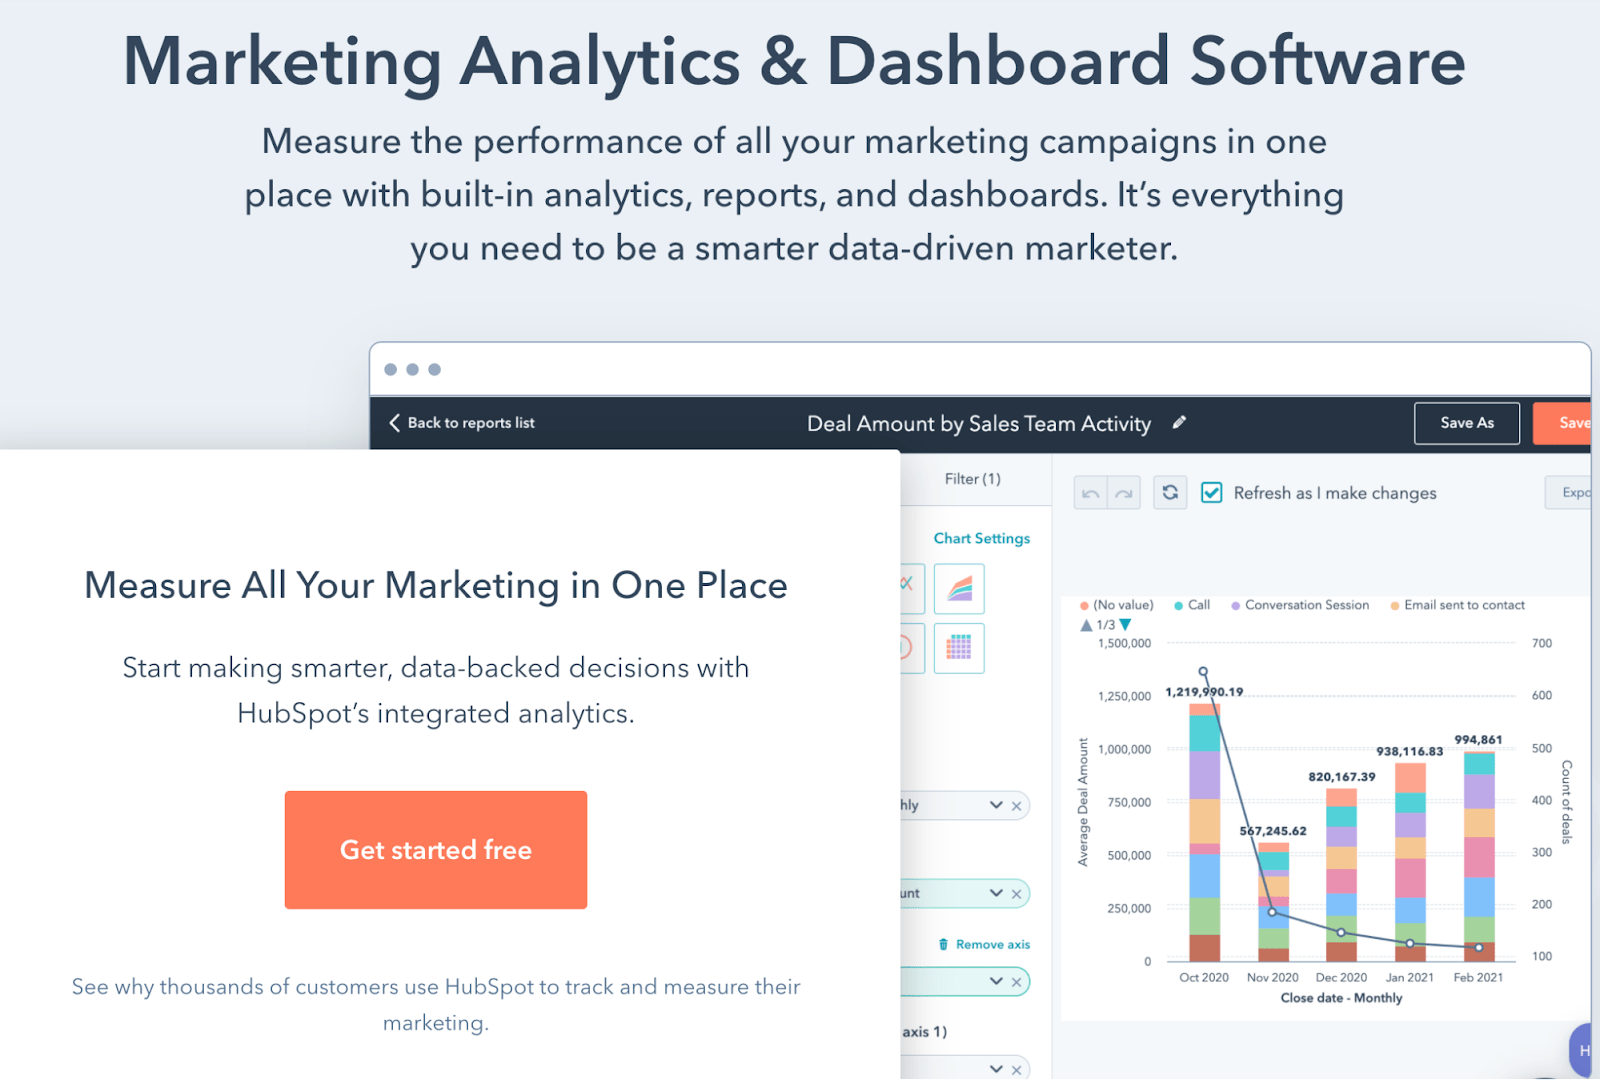 Excerpt of HubSpot's Marketing Analytics & Dashboard Software